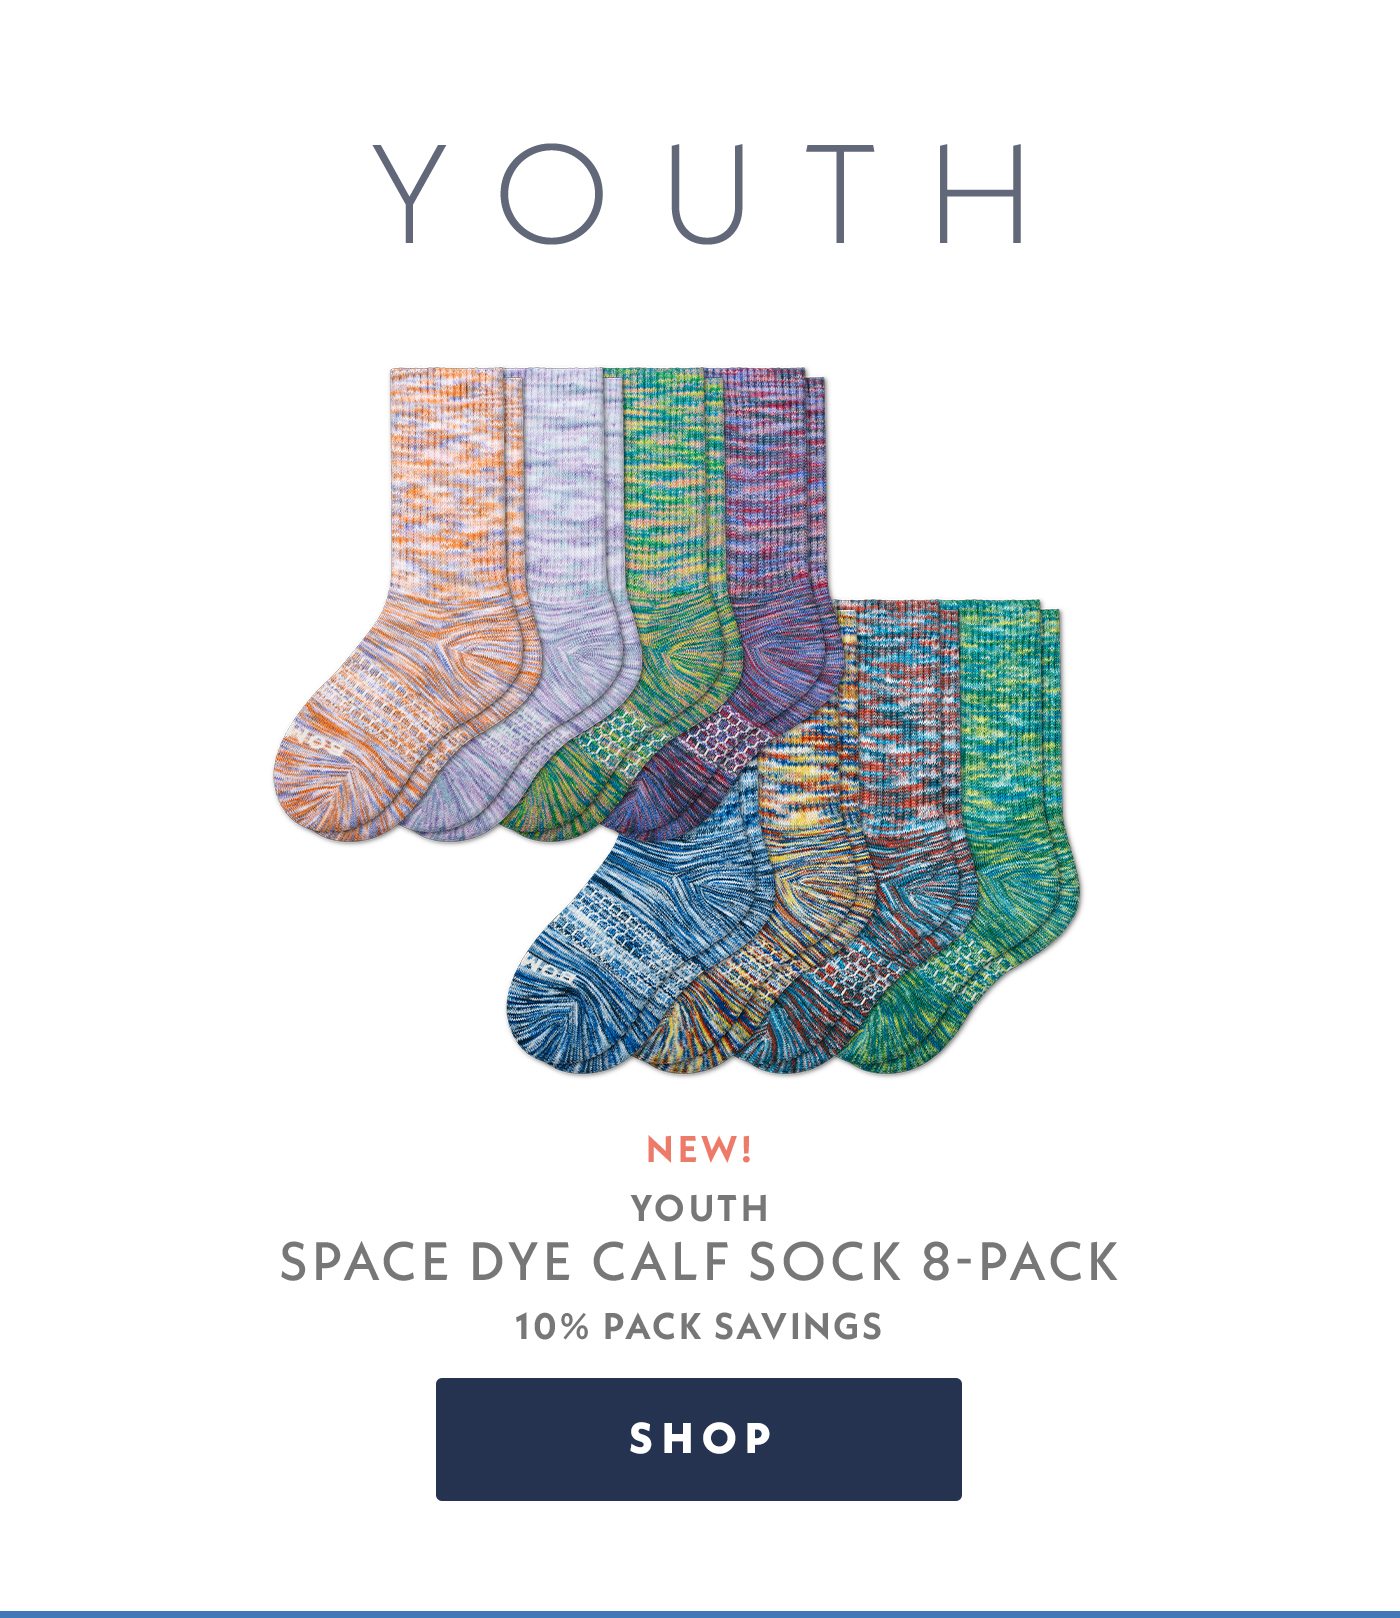 New! Youth Space Dye Calf Sock 8-Pack | 10% Pack Savings | Shop